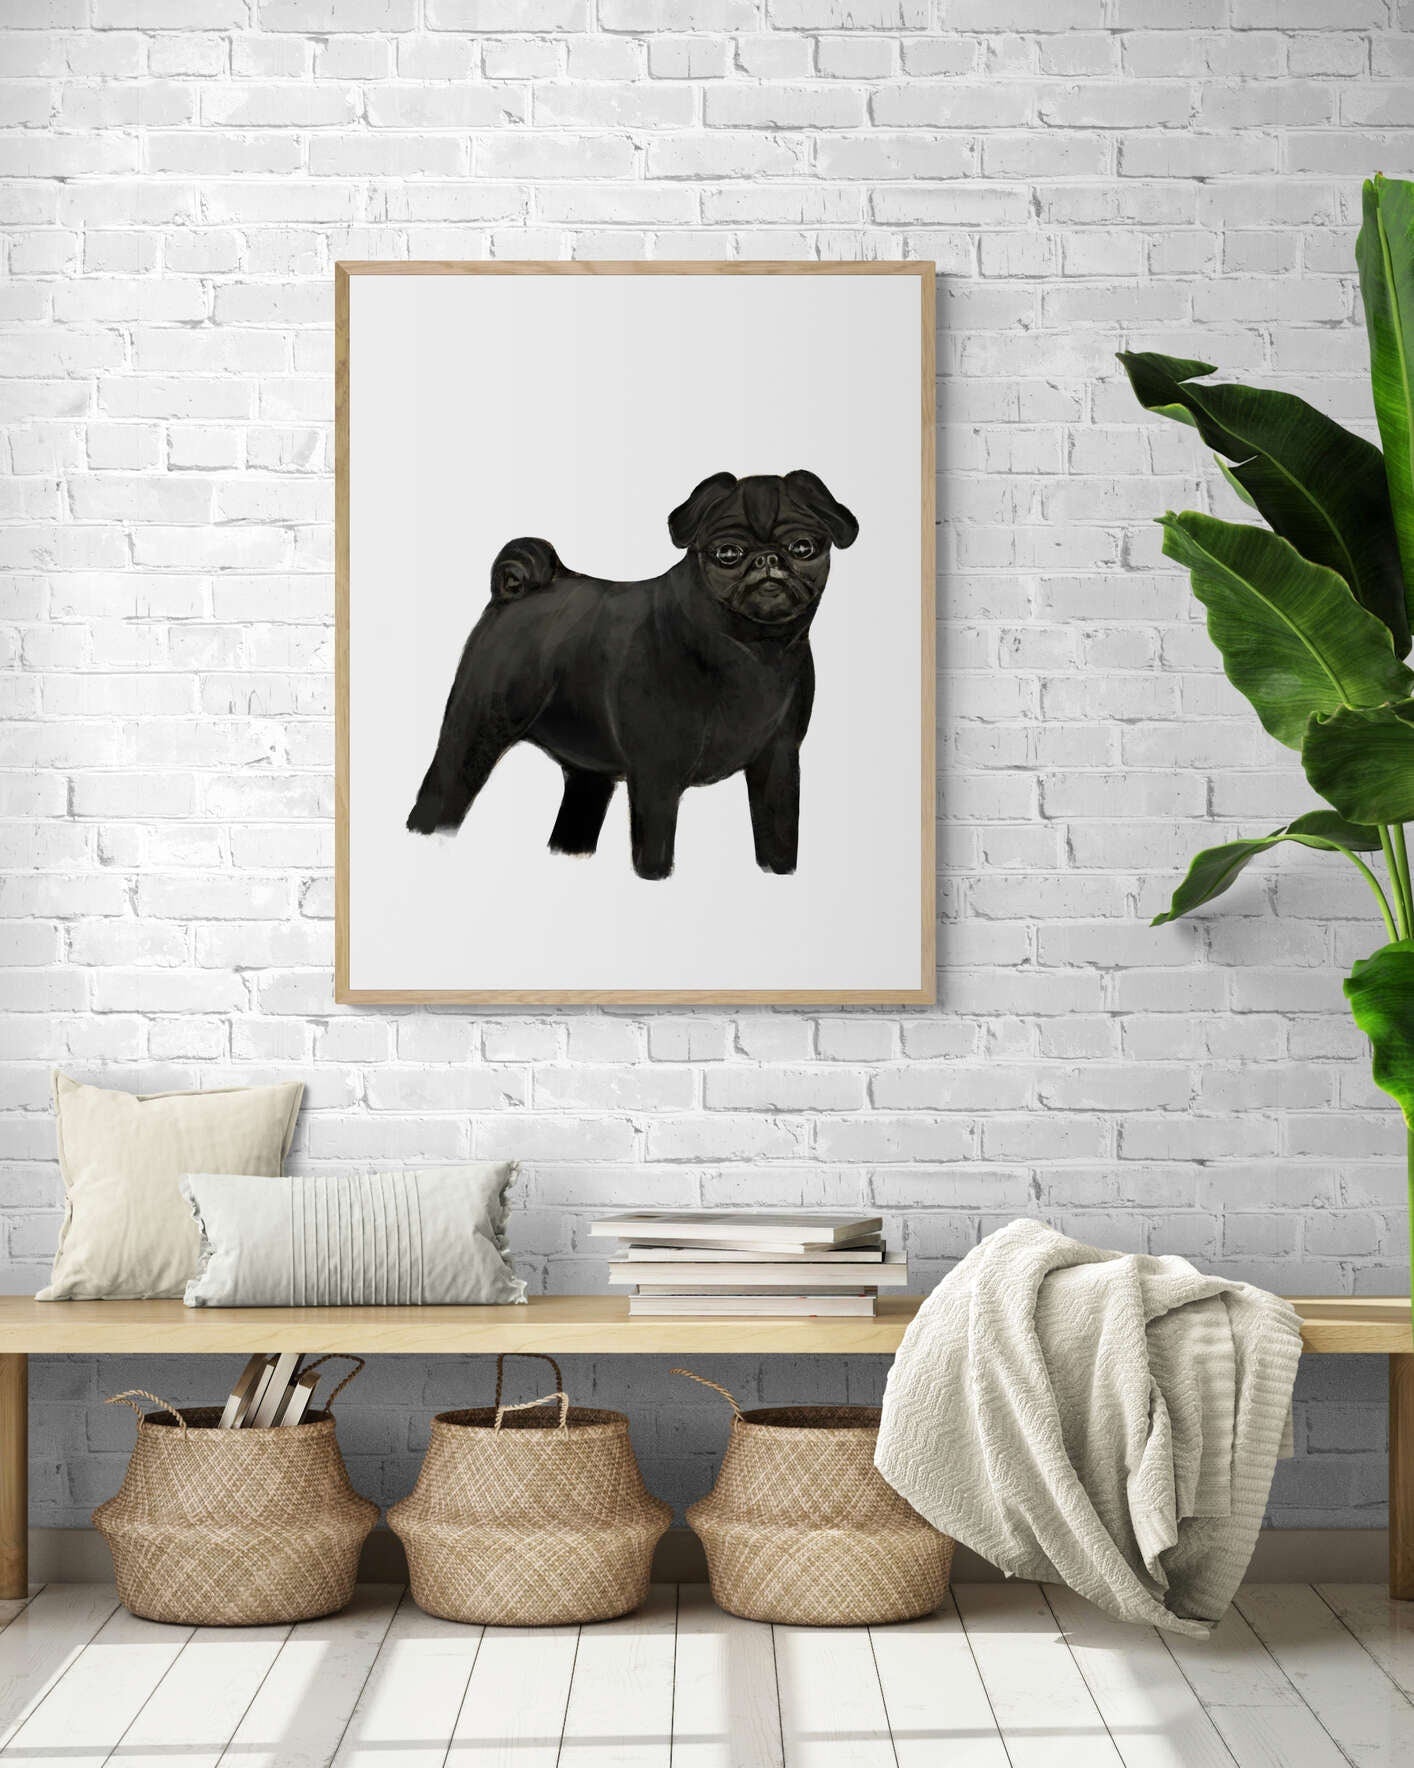 Personalized Black Pug Print, Pug Painting, Cute Pug Portrait, Doggy artwork, Living Room Wall Art, Bedroom Wall Print, Puppy Home Decor